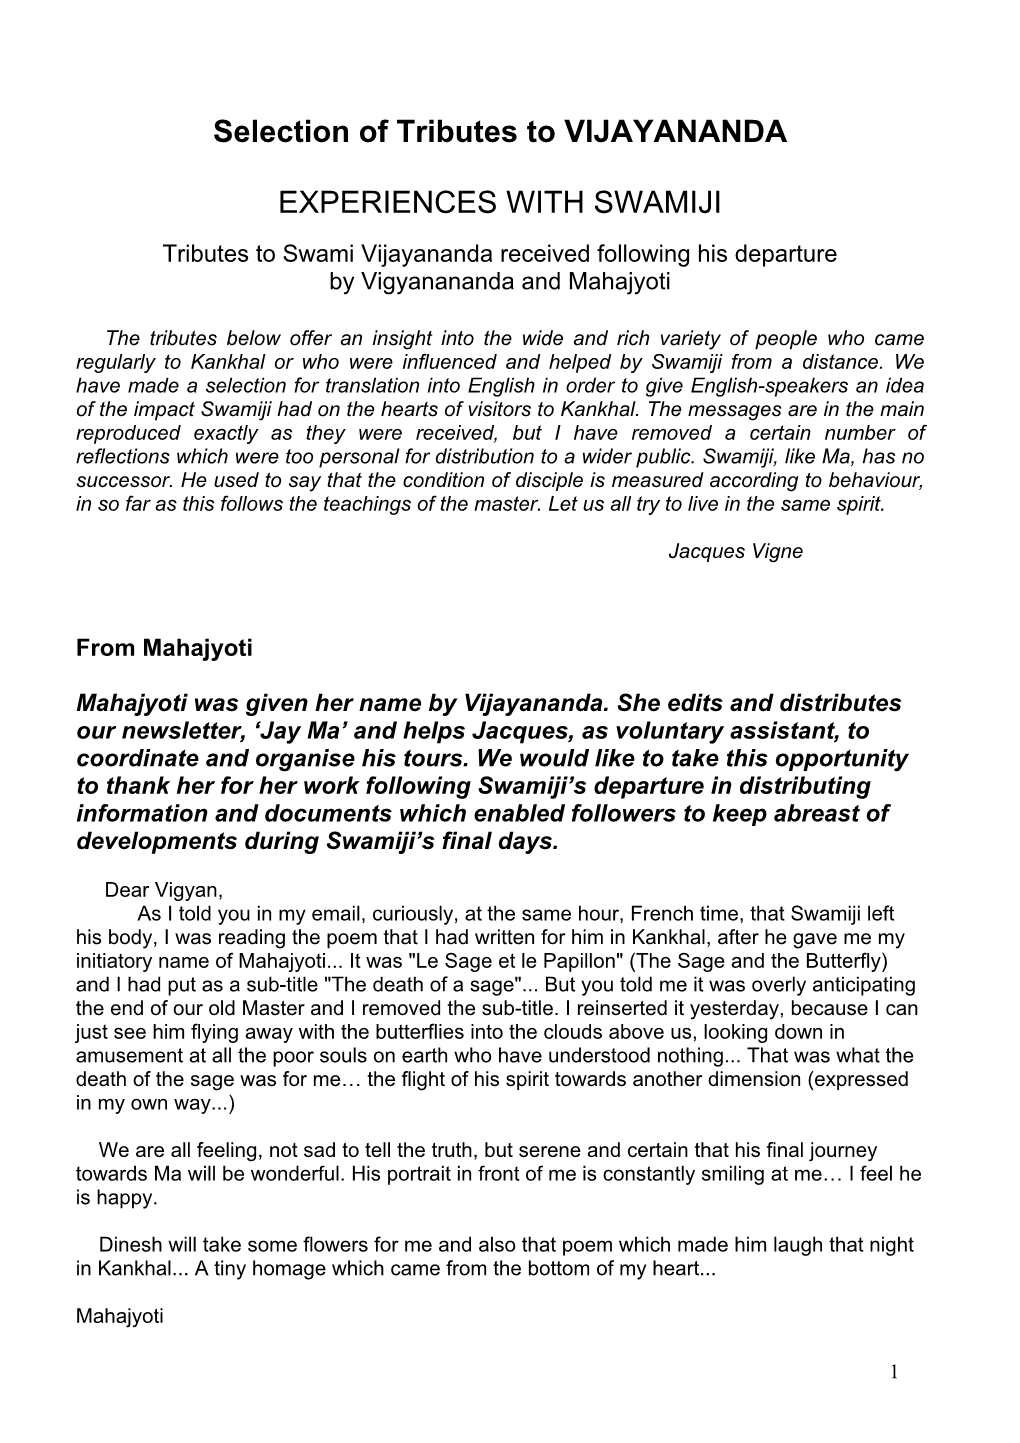 Tributes to Swami Vijayananda Received Following His Departure by Vigyanananda and Mahajyoti